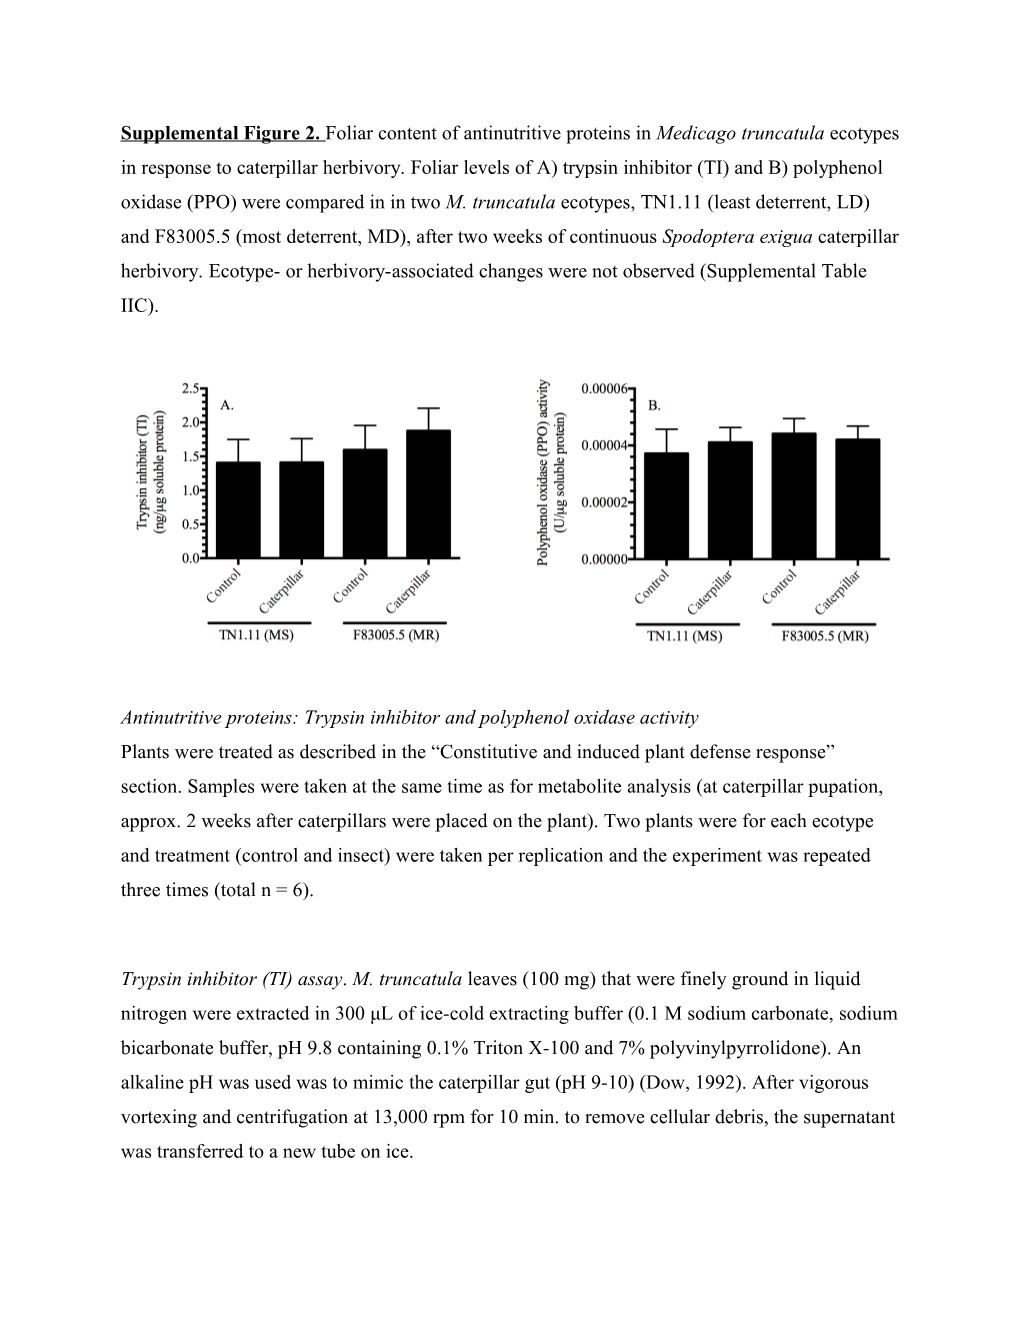 Antinutritive Proteins: Trypsin Inhibitor and Polyphenol Oxidase Activity